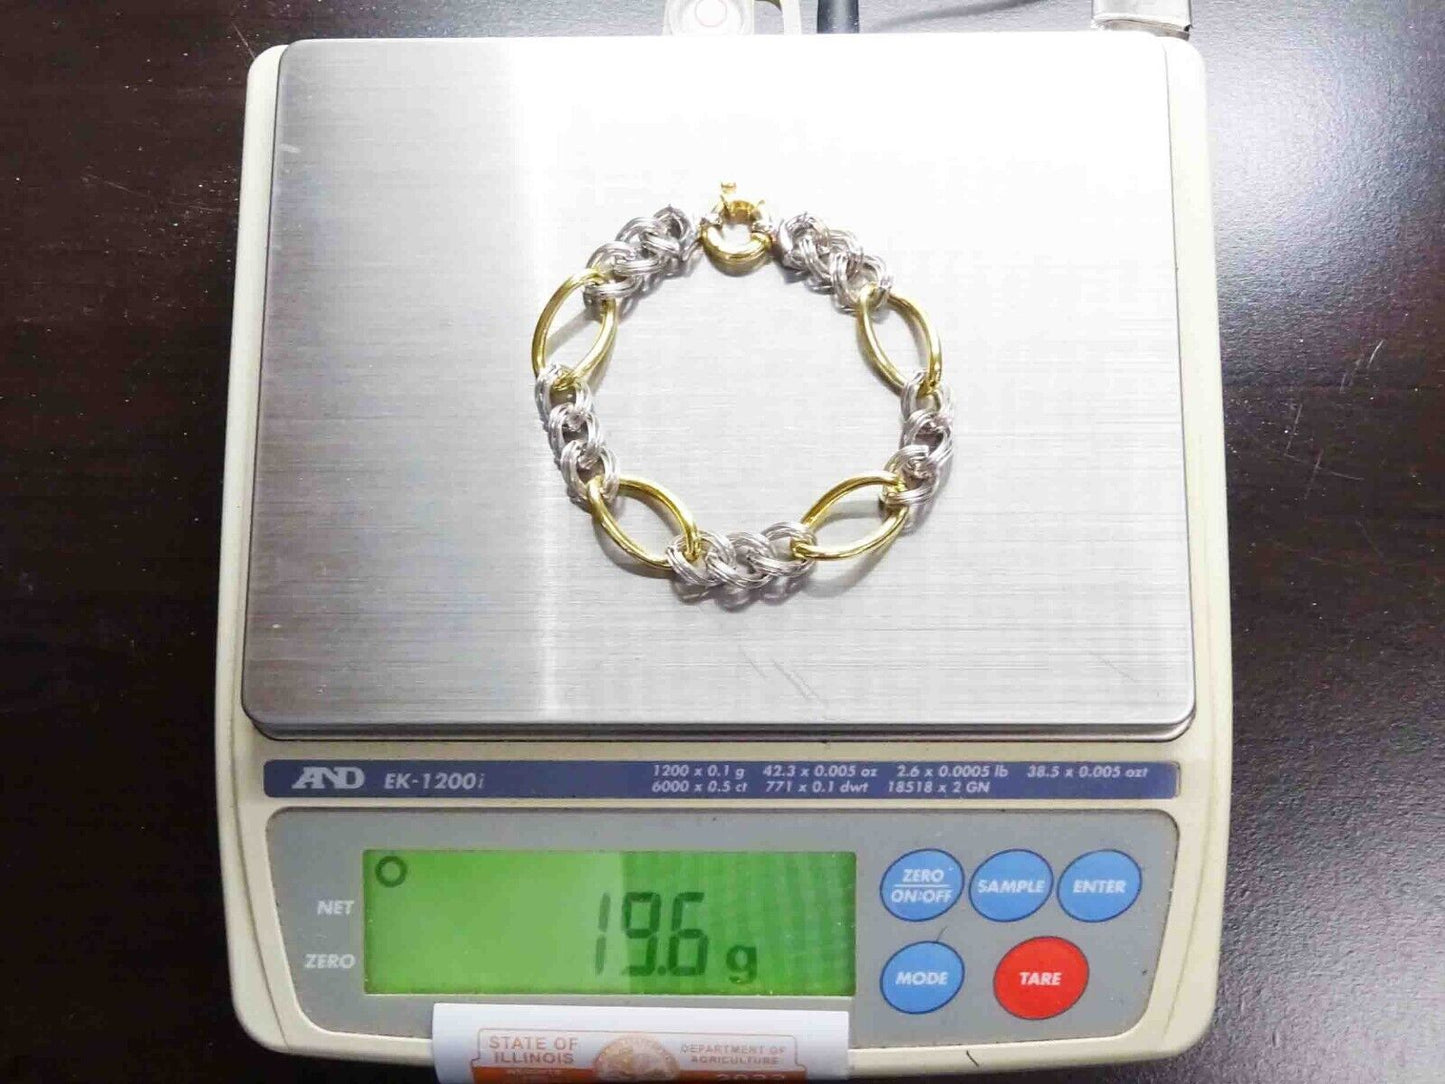 10-13mm Wide Men's Figaro Link Bracelet 14k Two-Tone Gold 8" Long 19.6 Grams